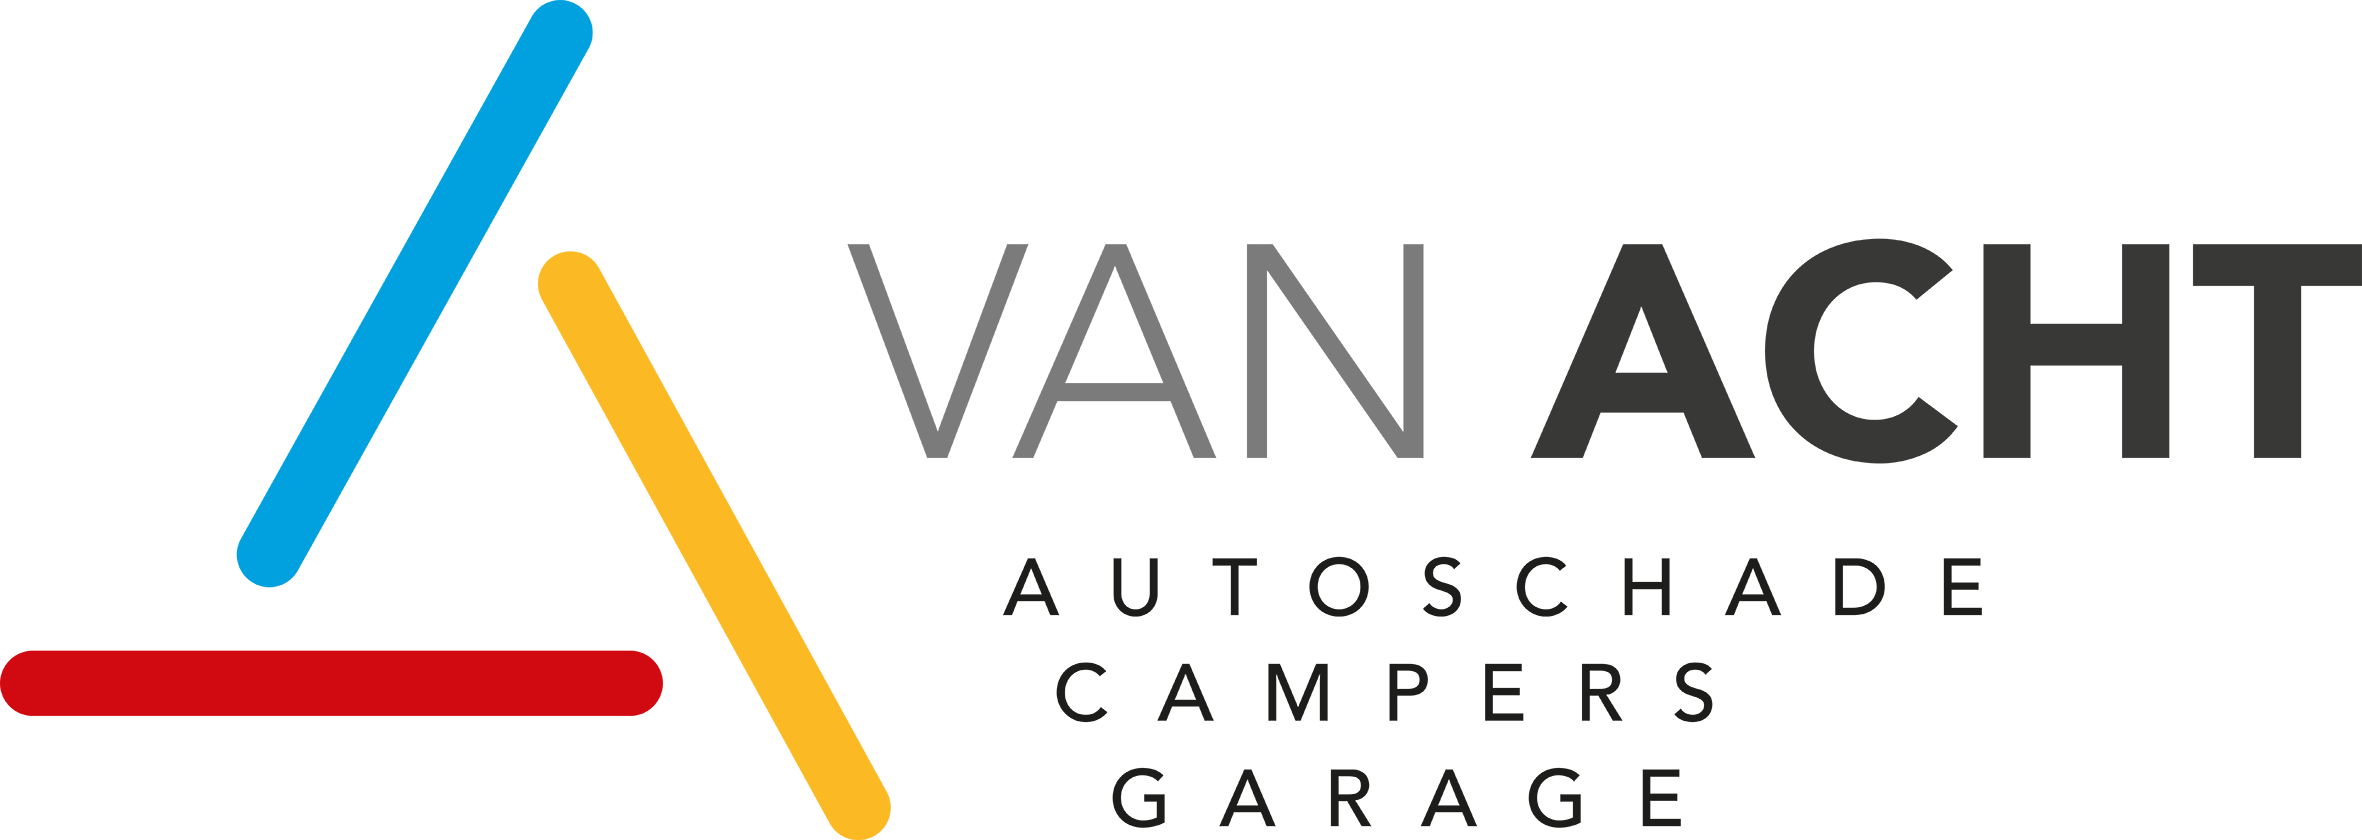 Van-Acht-Algemeen-logo-RGB-trans.png